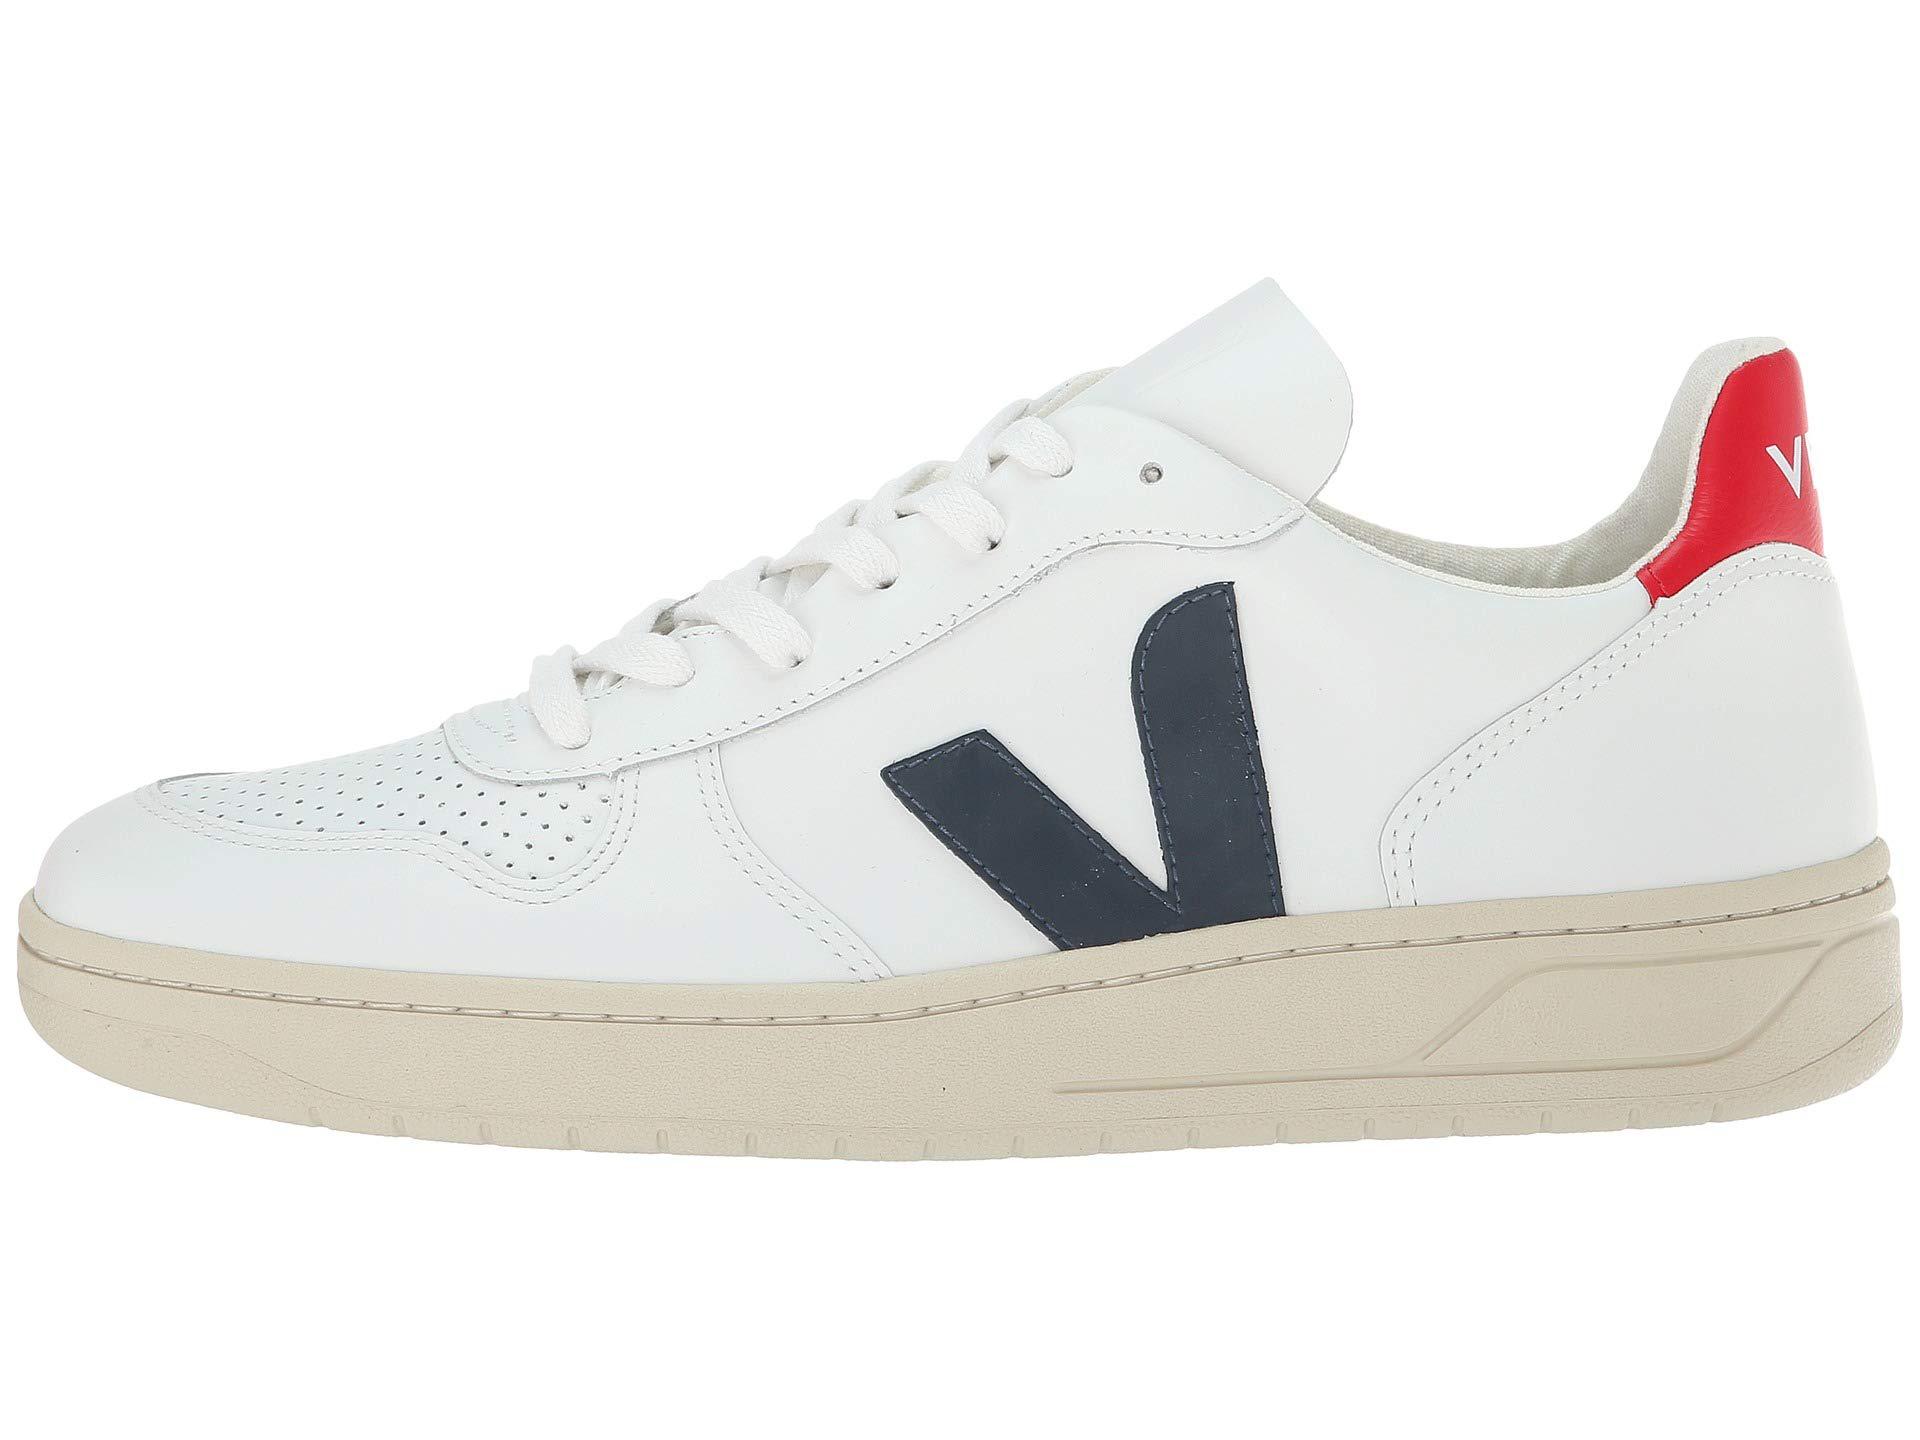 Veja V-10 (black/white Leather) Athletic Shoes for Men - Lyst